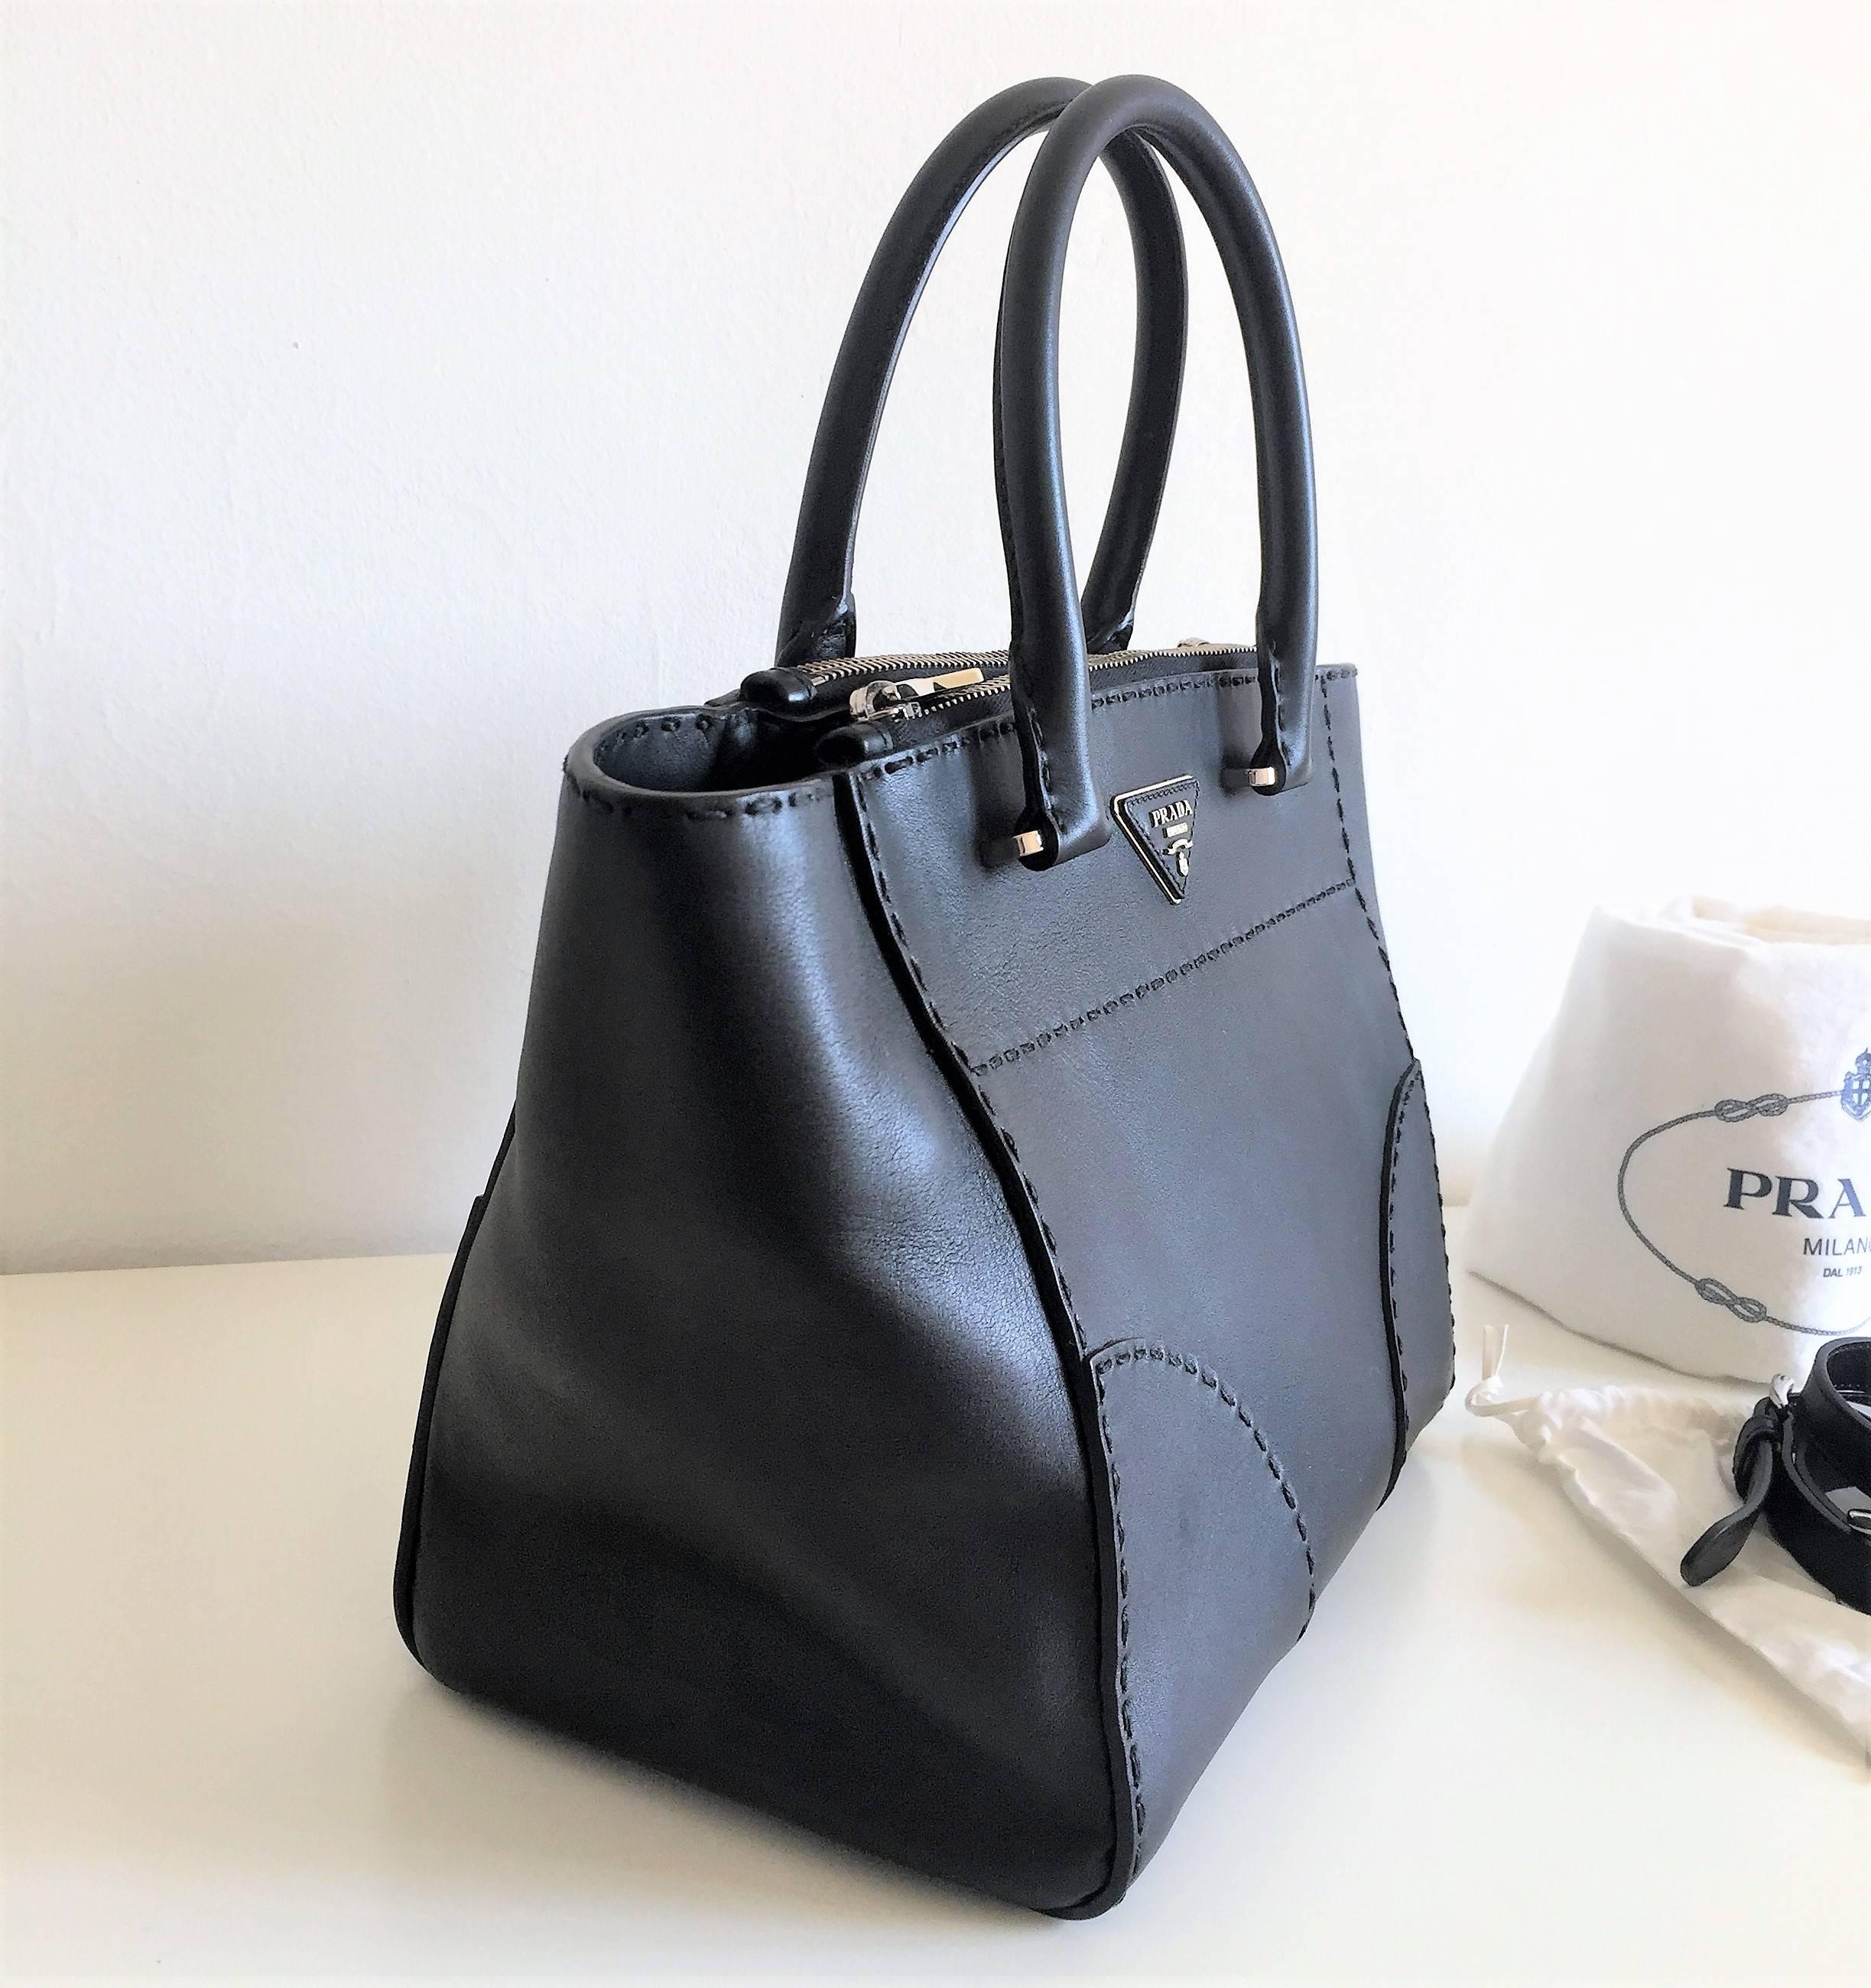 Prada Black Leather Shoulder bag, a Pristine '2way City' Calf Leather Tote For Sale 1